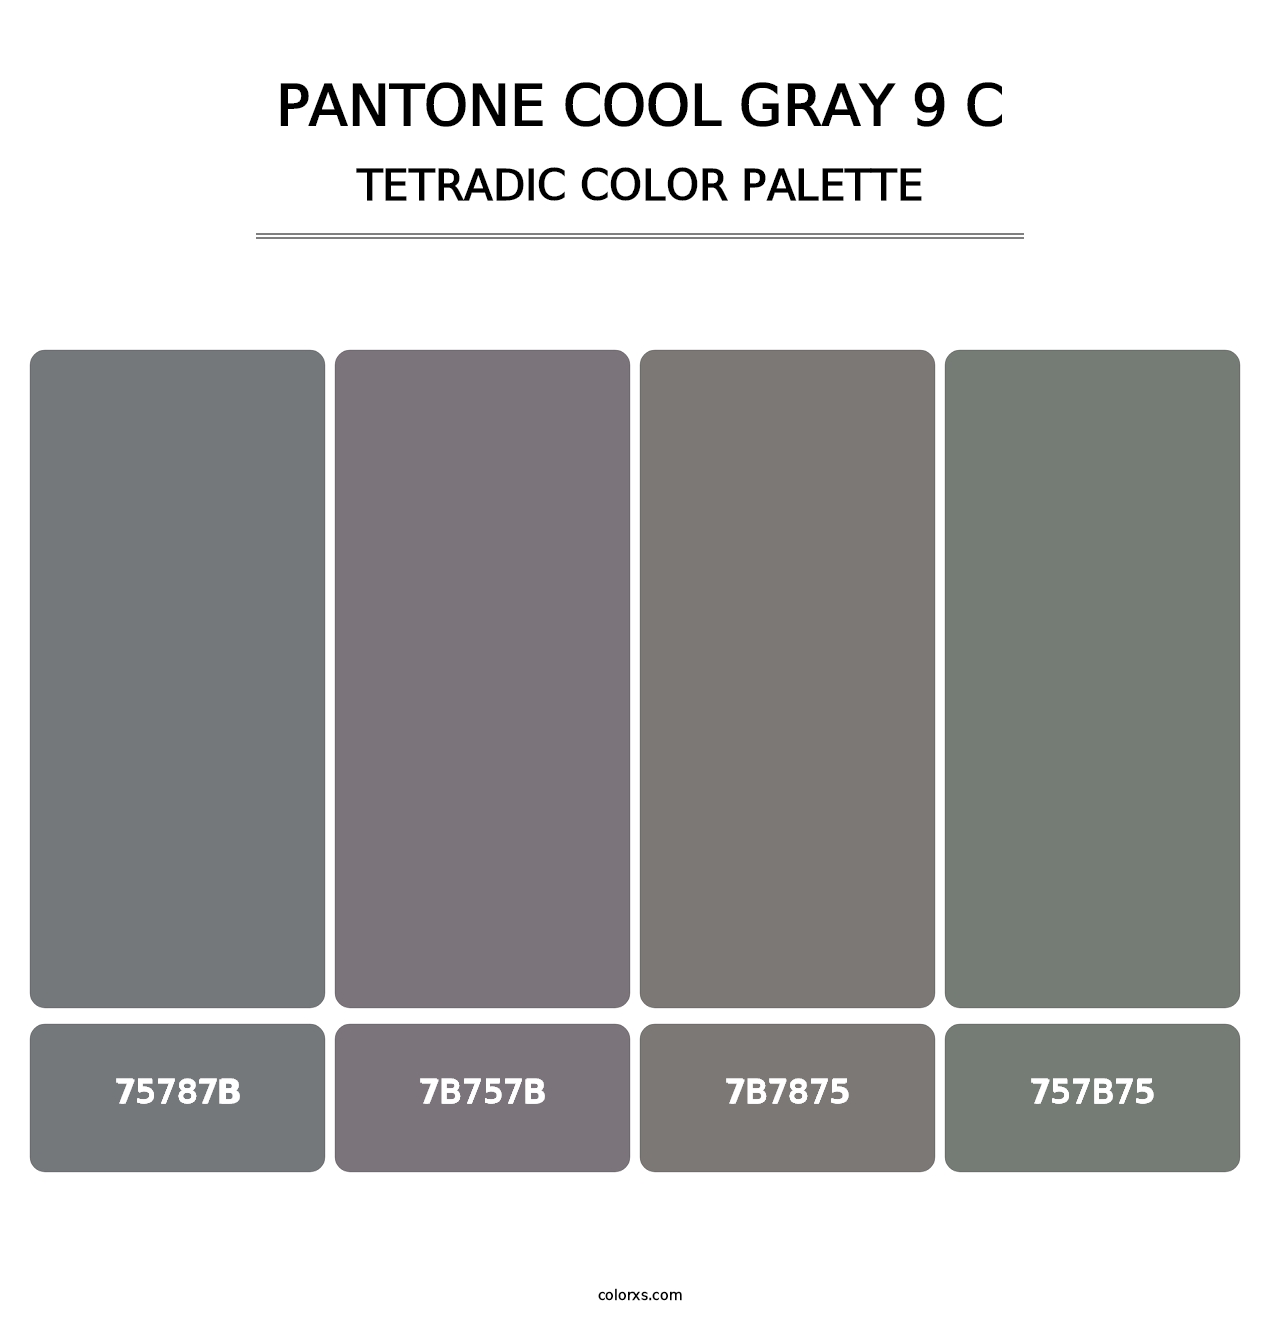 PANTONE Cool Gray 9 C - Tetradic Color Palette